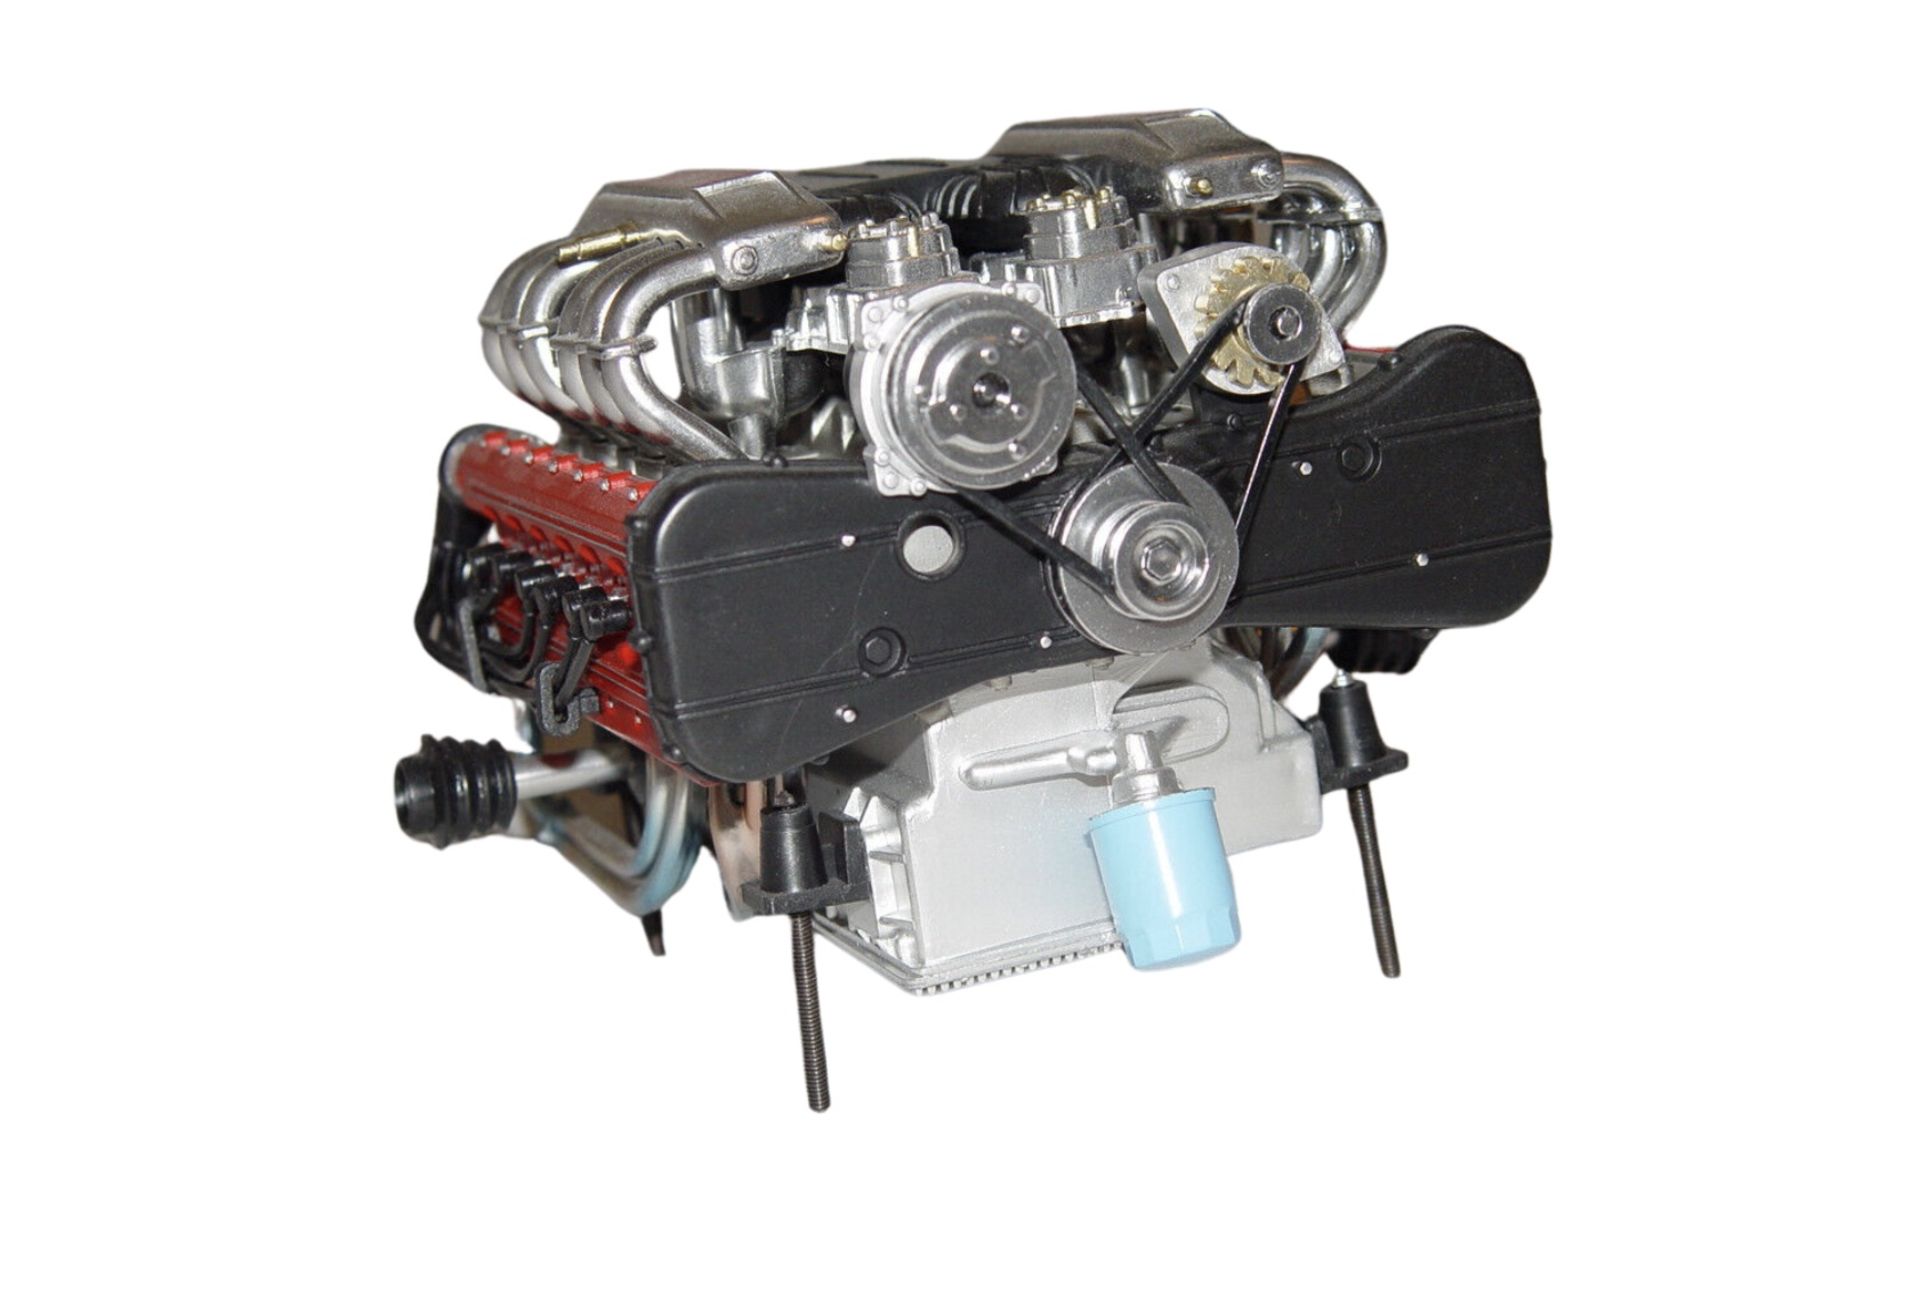 Ferrari Testarossa 1/8 Scale Engine Desk Model Display - Bild 5 aus 6